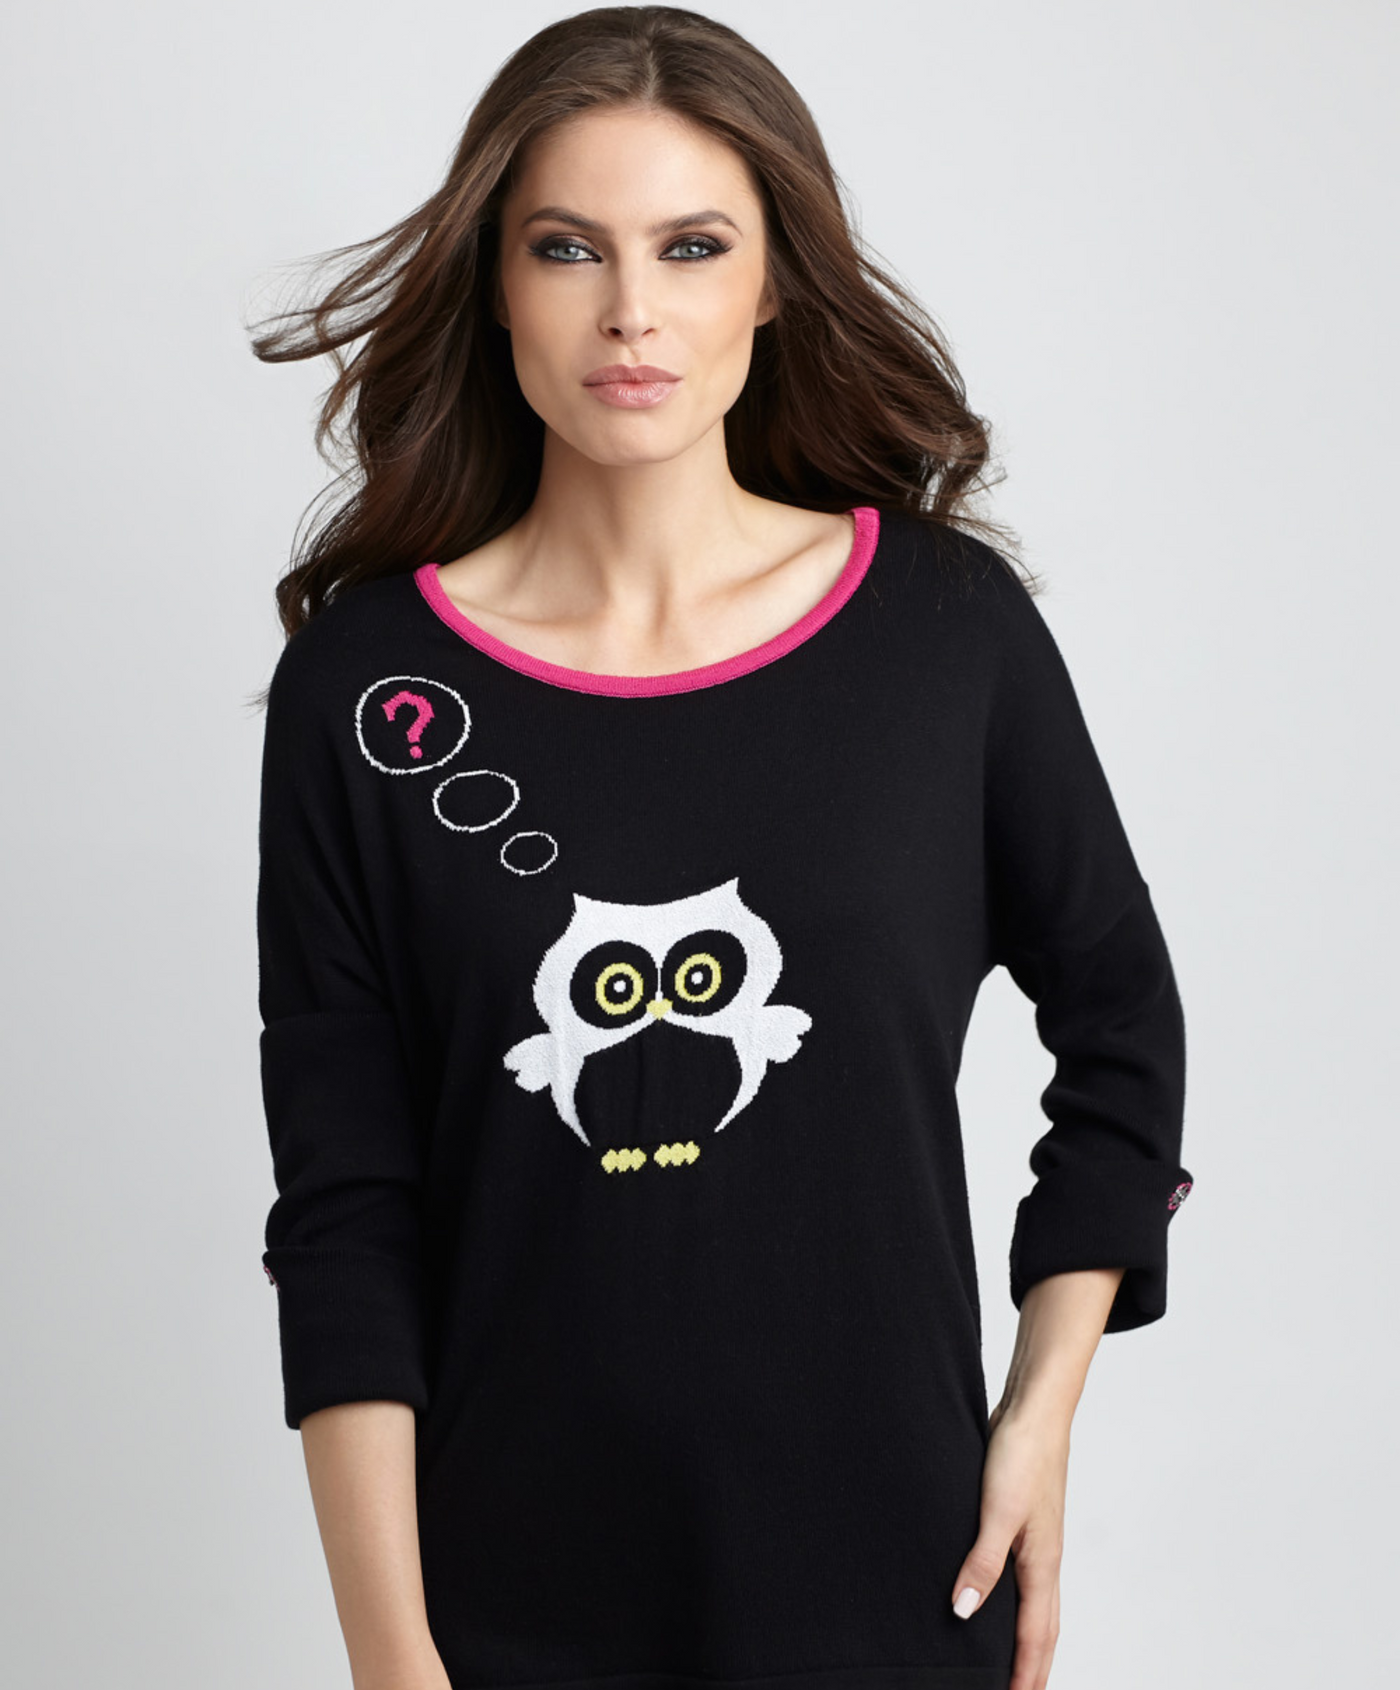 Owl Graphic Sweater